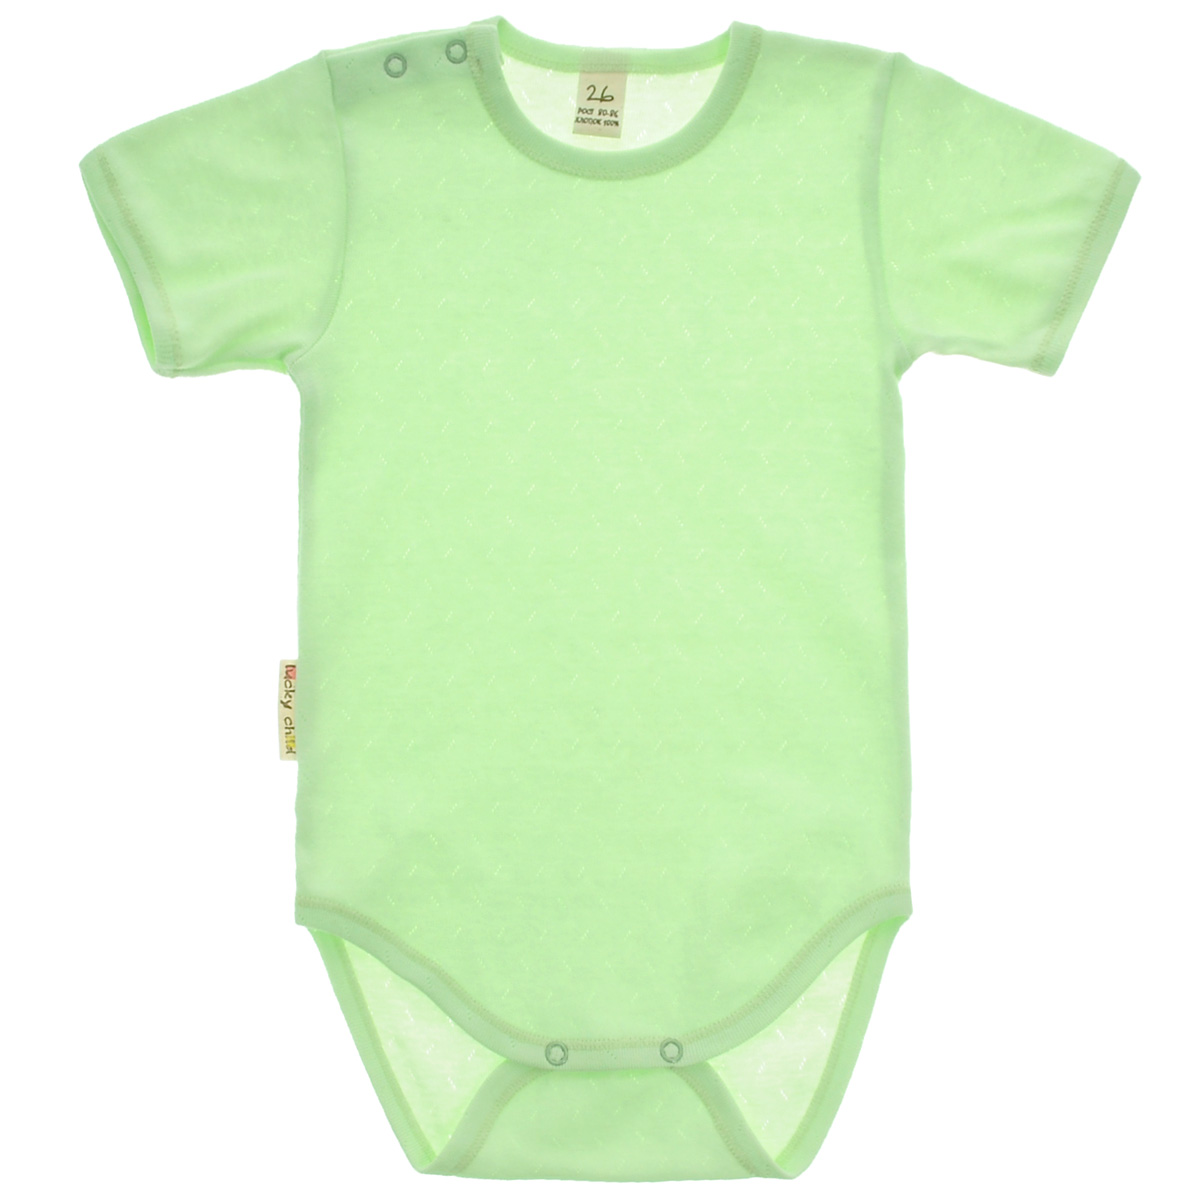 Боди-футболка Lucky Child Ажур, цвет: зеленый. 0-30. Размер 80/86